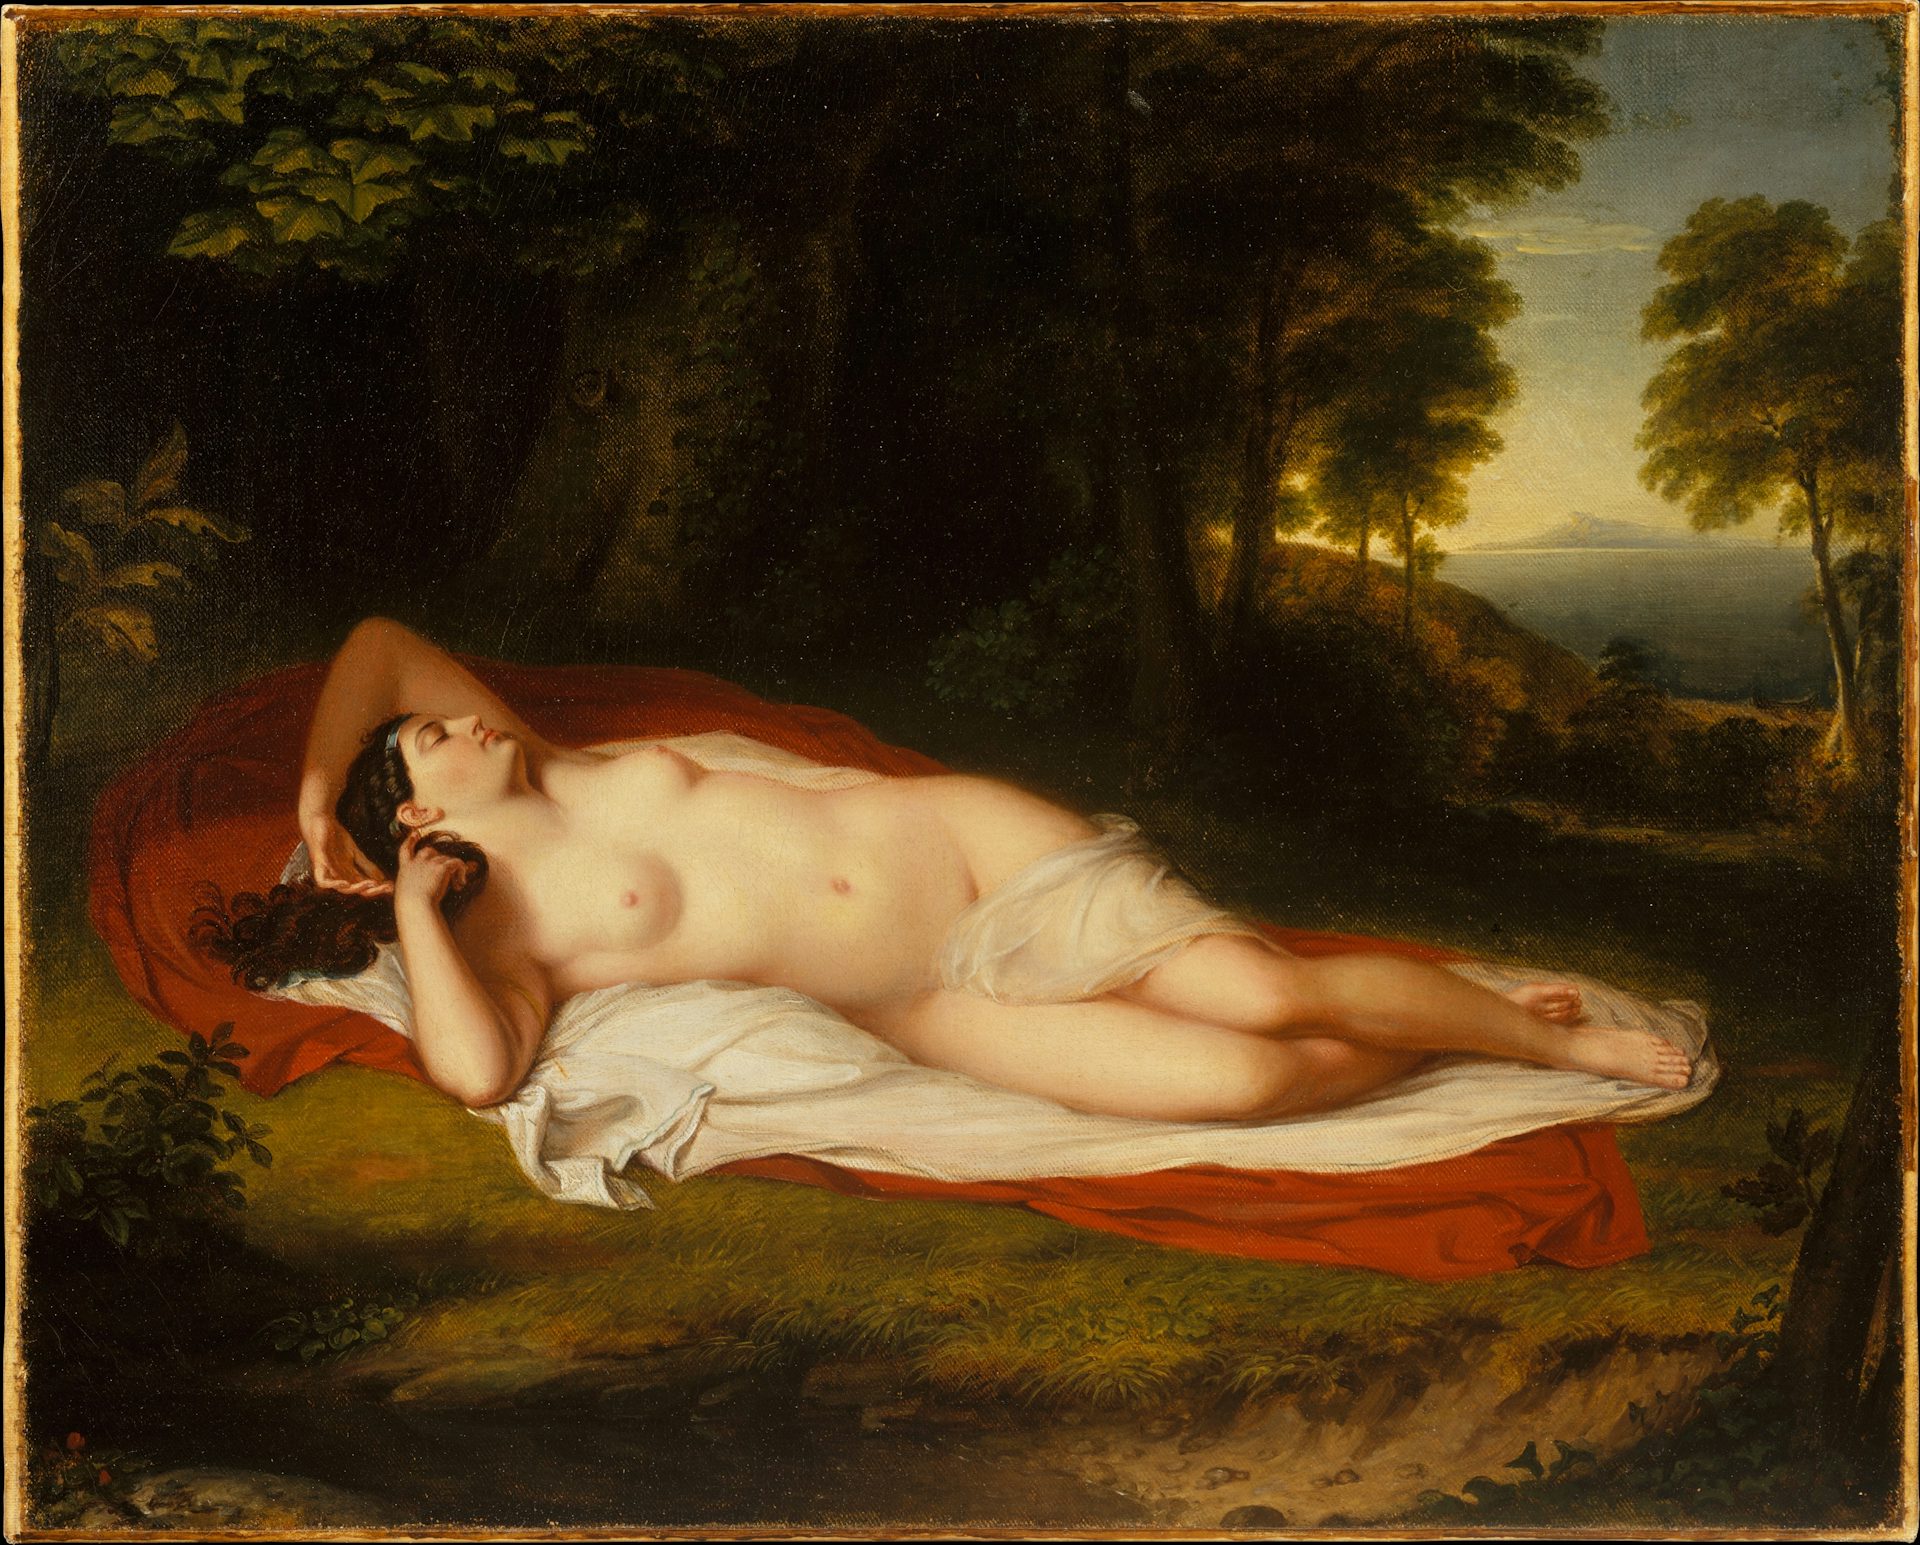 Ariadne by Asher Brown Durand, after John Vanderlyn